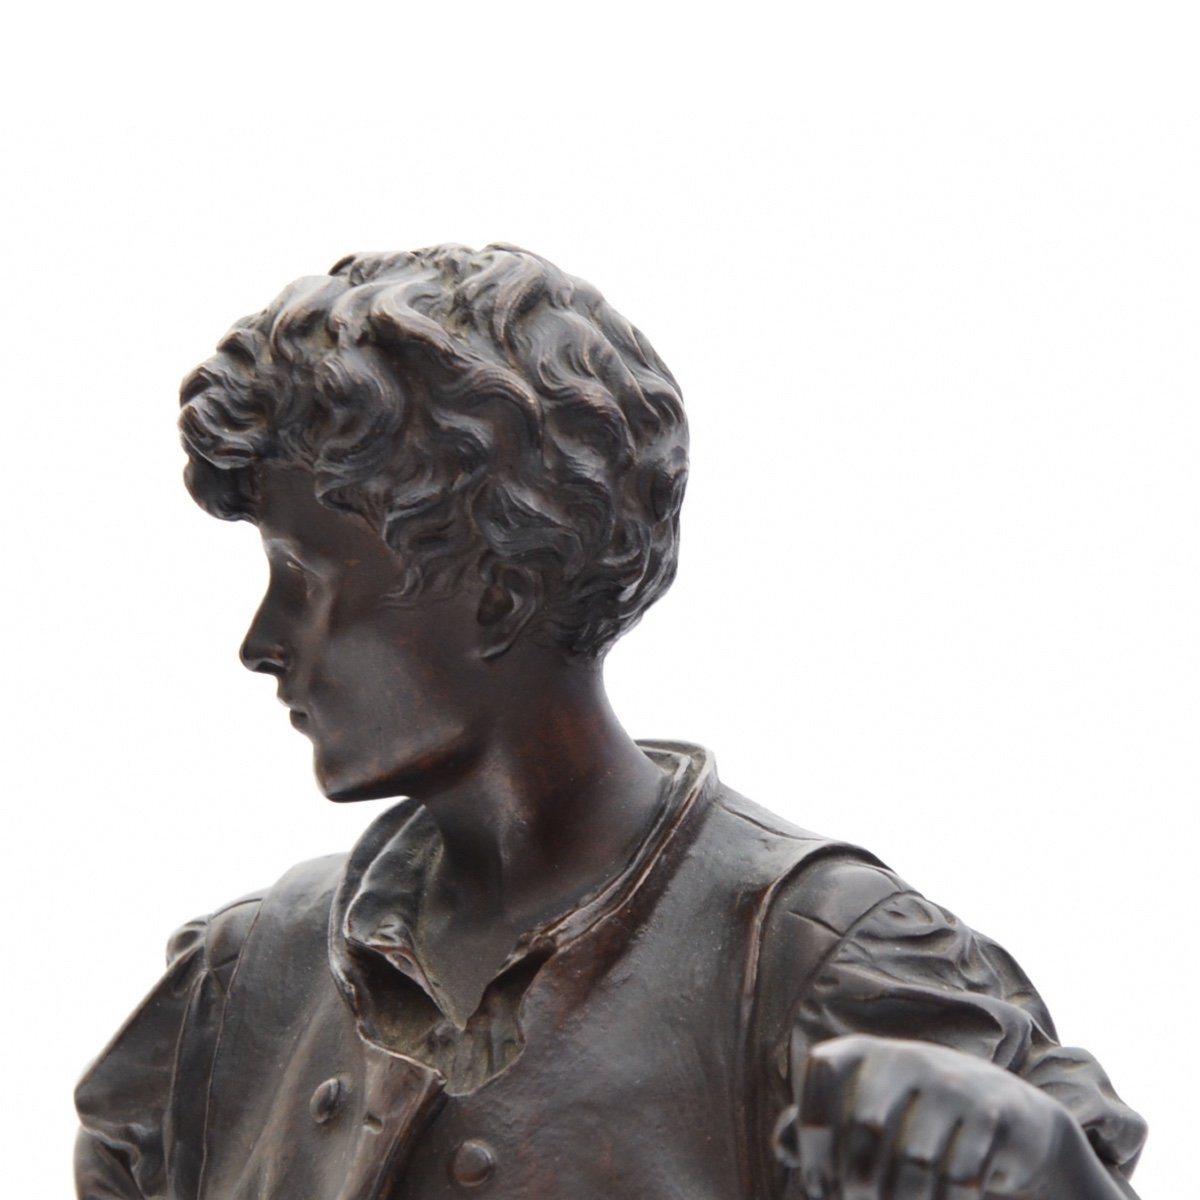 Eutrope Bouret (1833 - 1906) Patinated Bronze Sculpture - The Work-photo-4